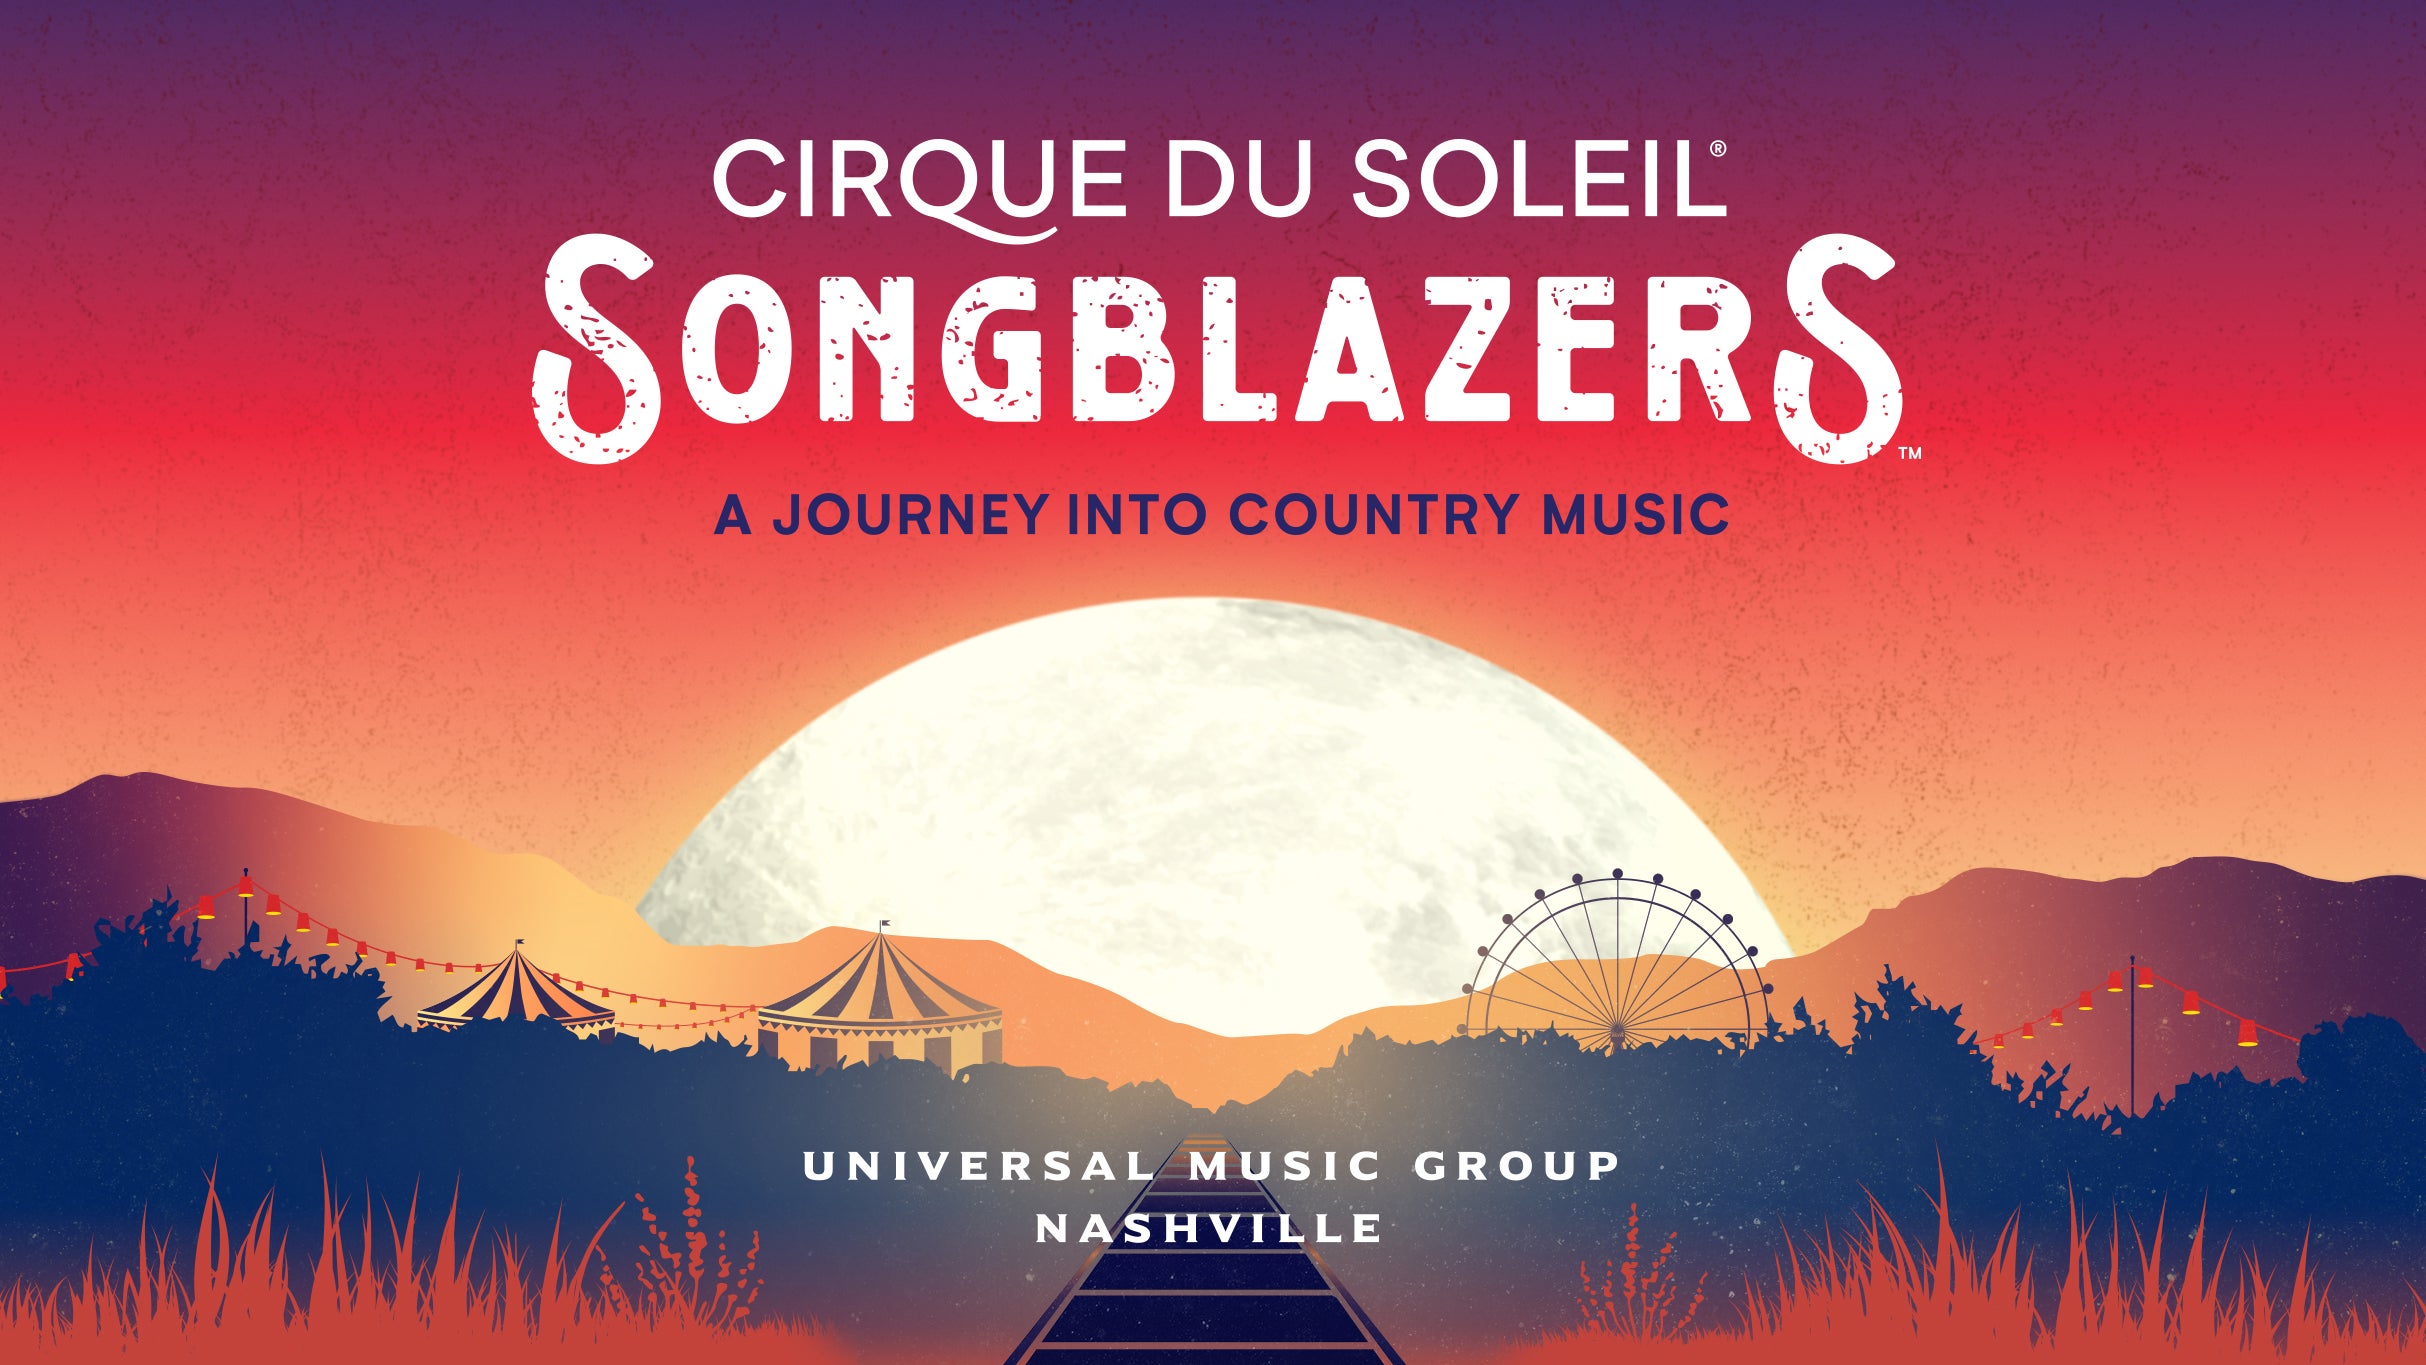 Cirque du Soleil: Songblazers in Dallas promo photo for Venue presale offer code